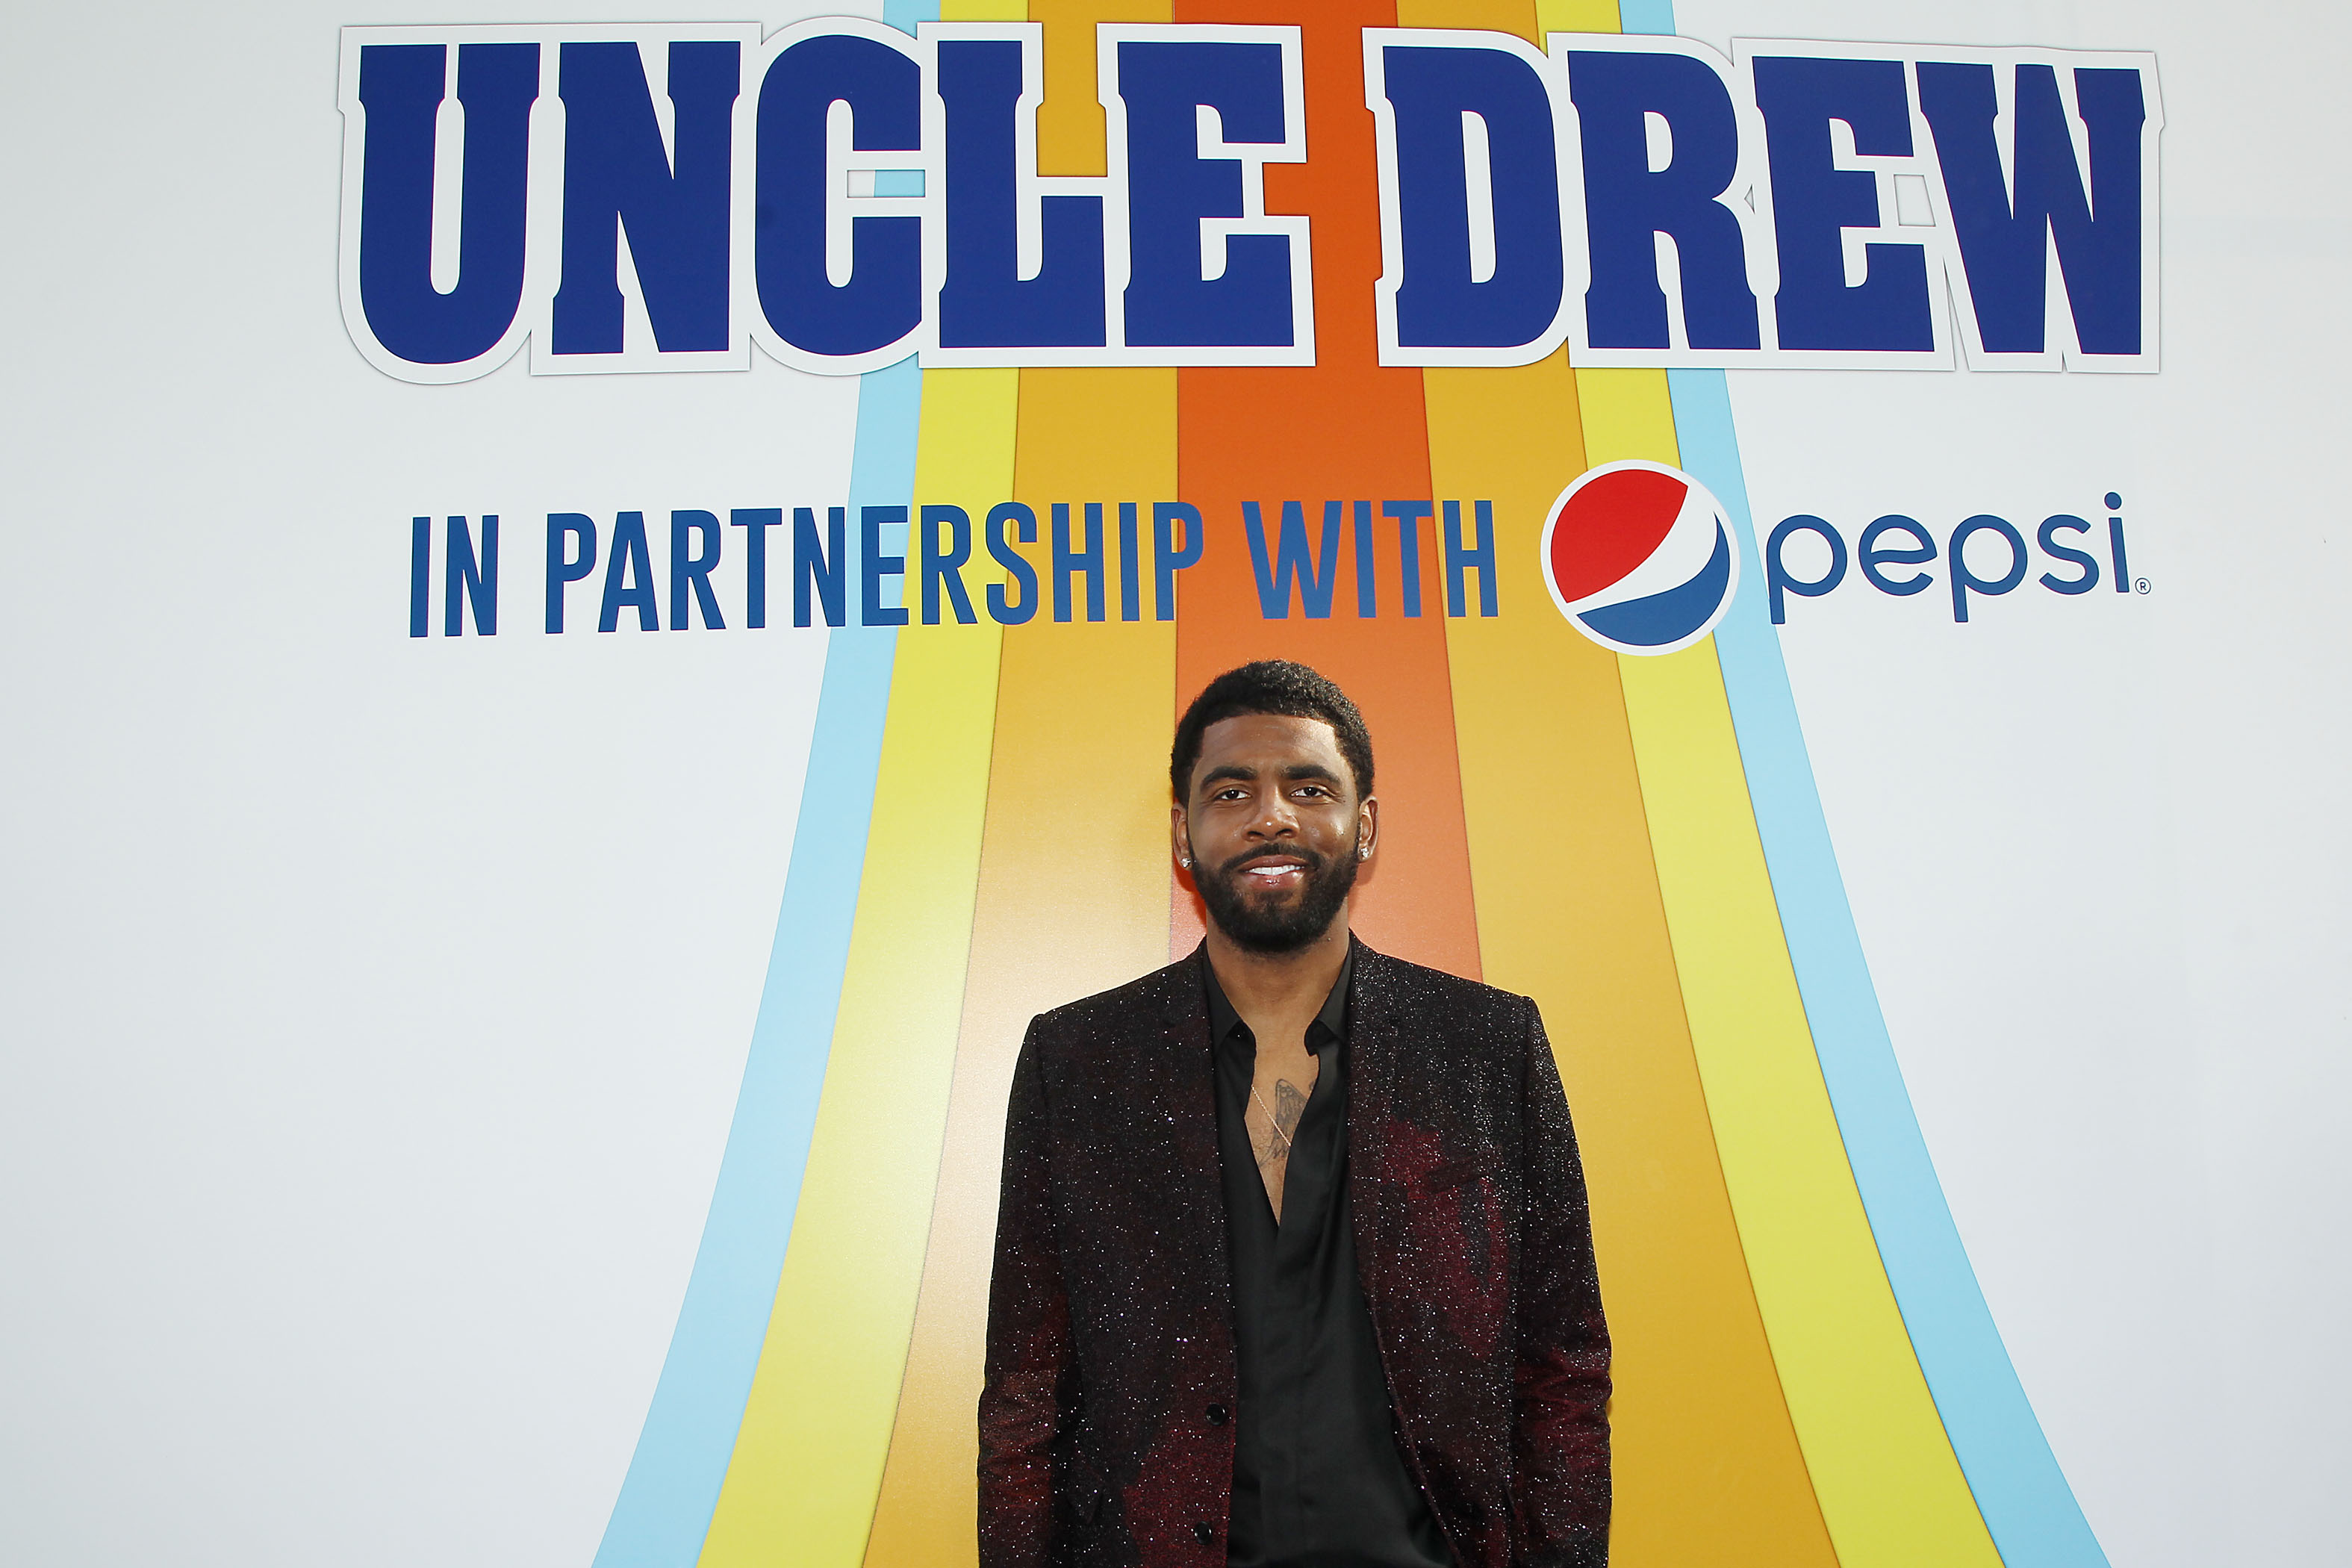 Summit EntertainmentÕs "UNCLE DREW" World Premiere In Partnership with Pepsi